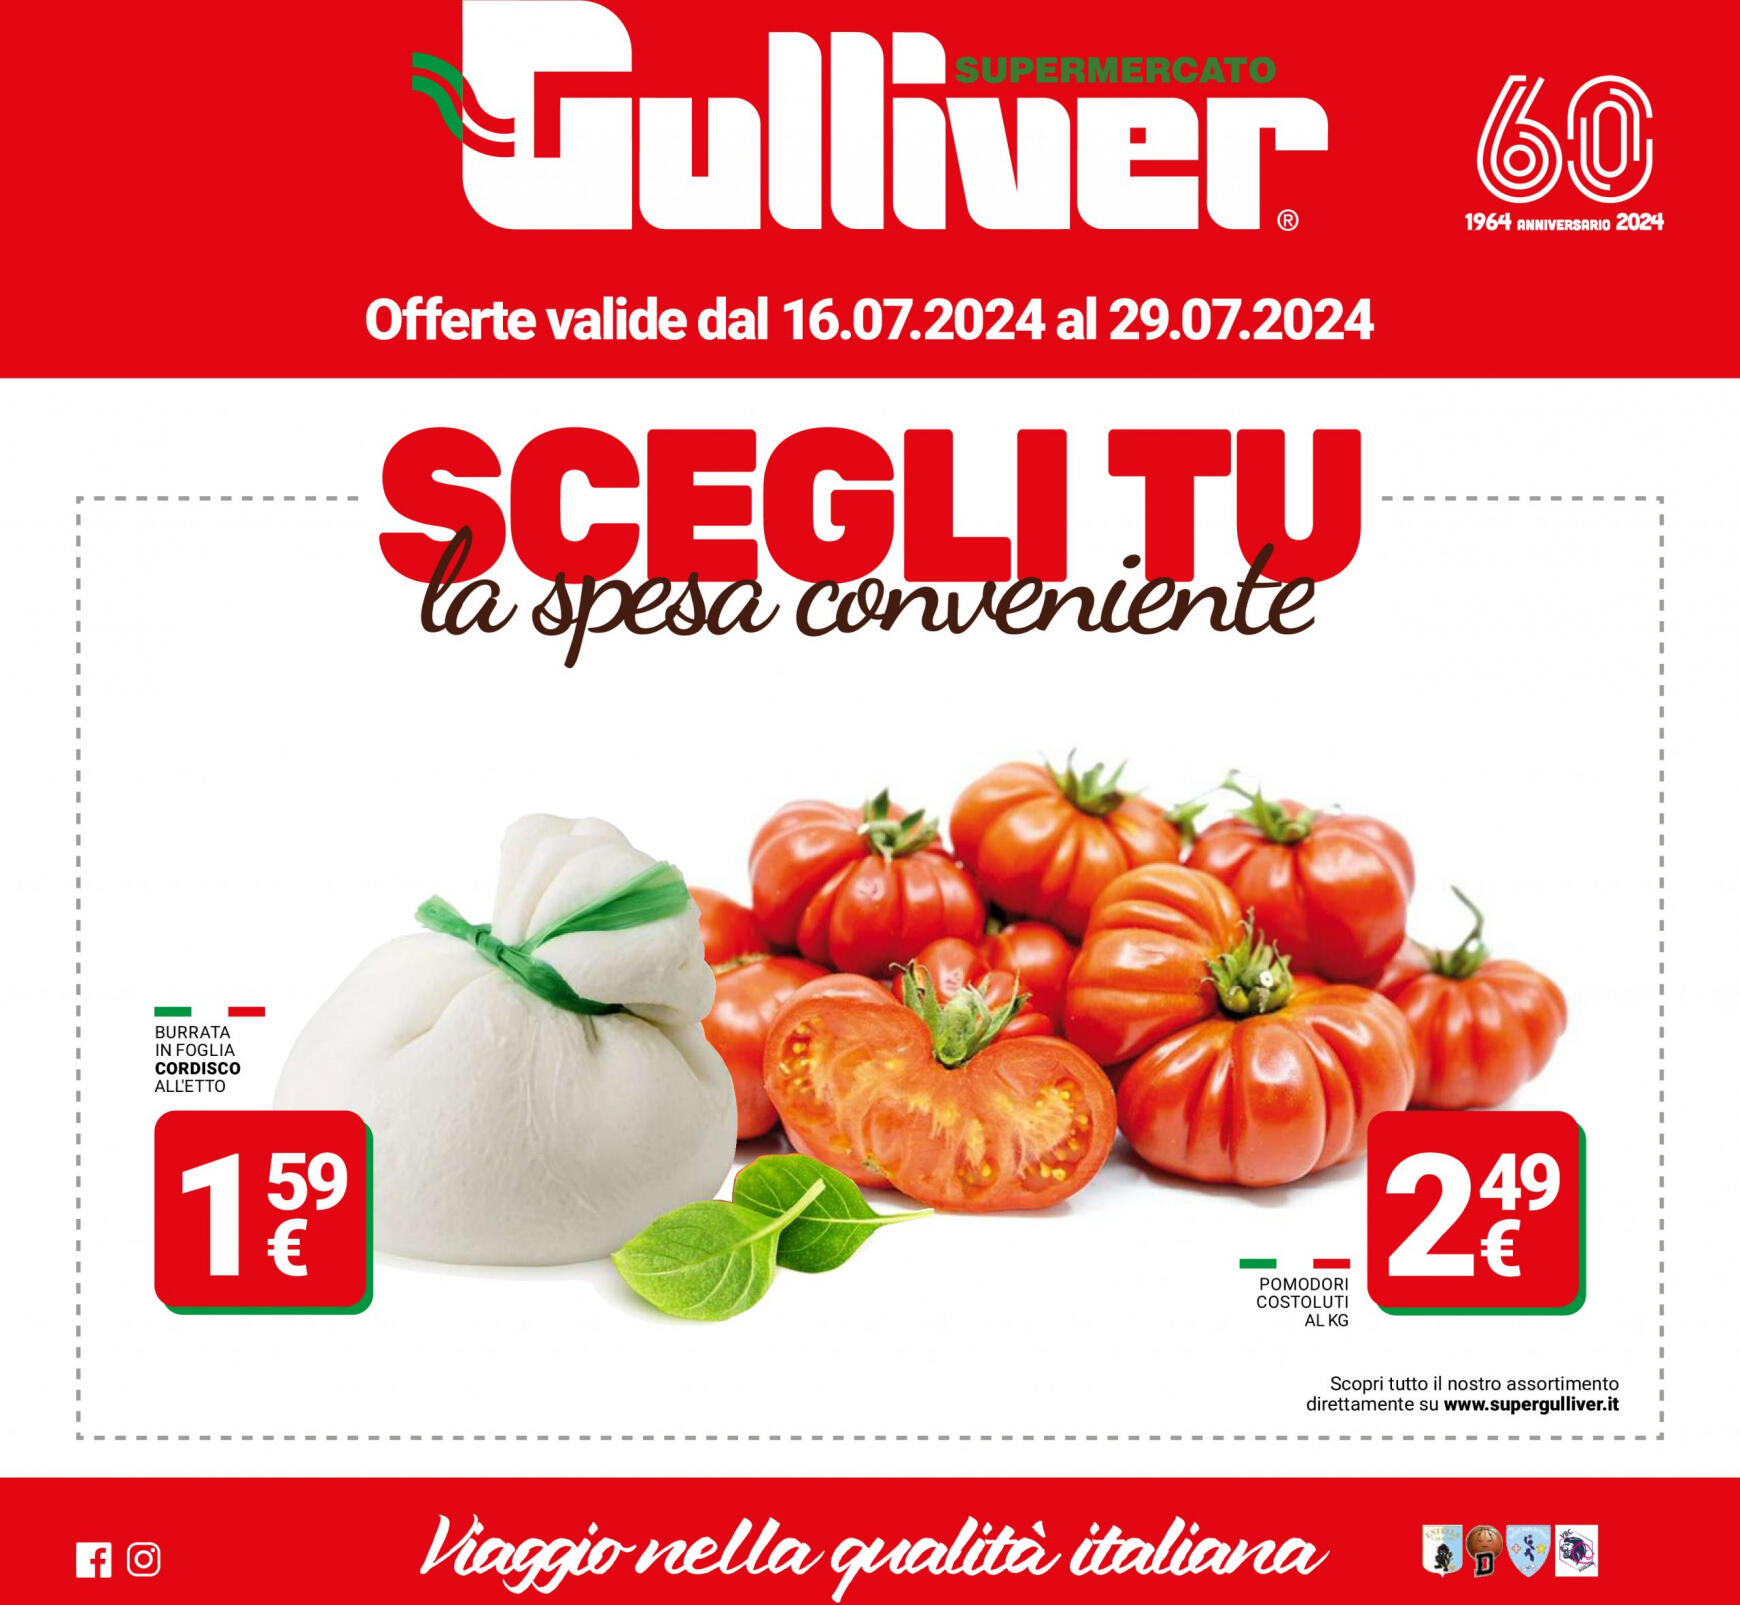 gulliver - Nuovo volantino Gulliver 16.07. - 29.07.